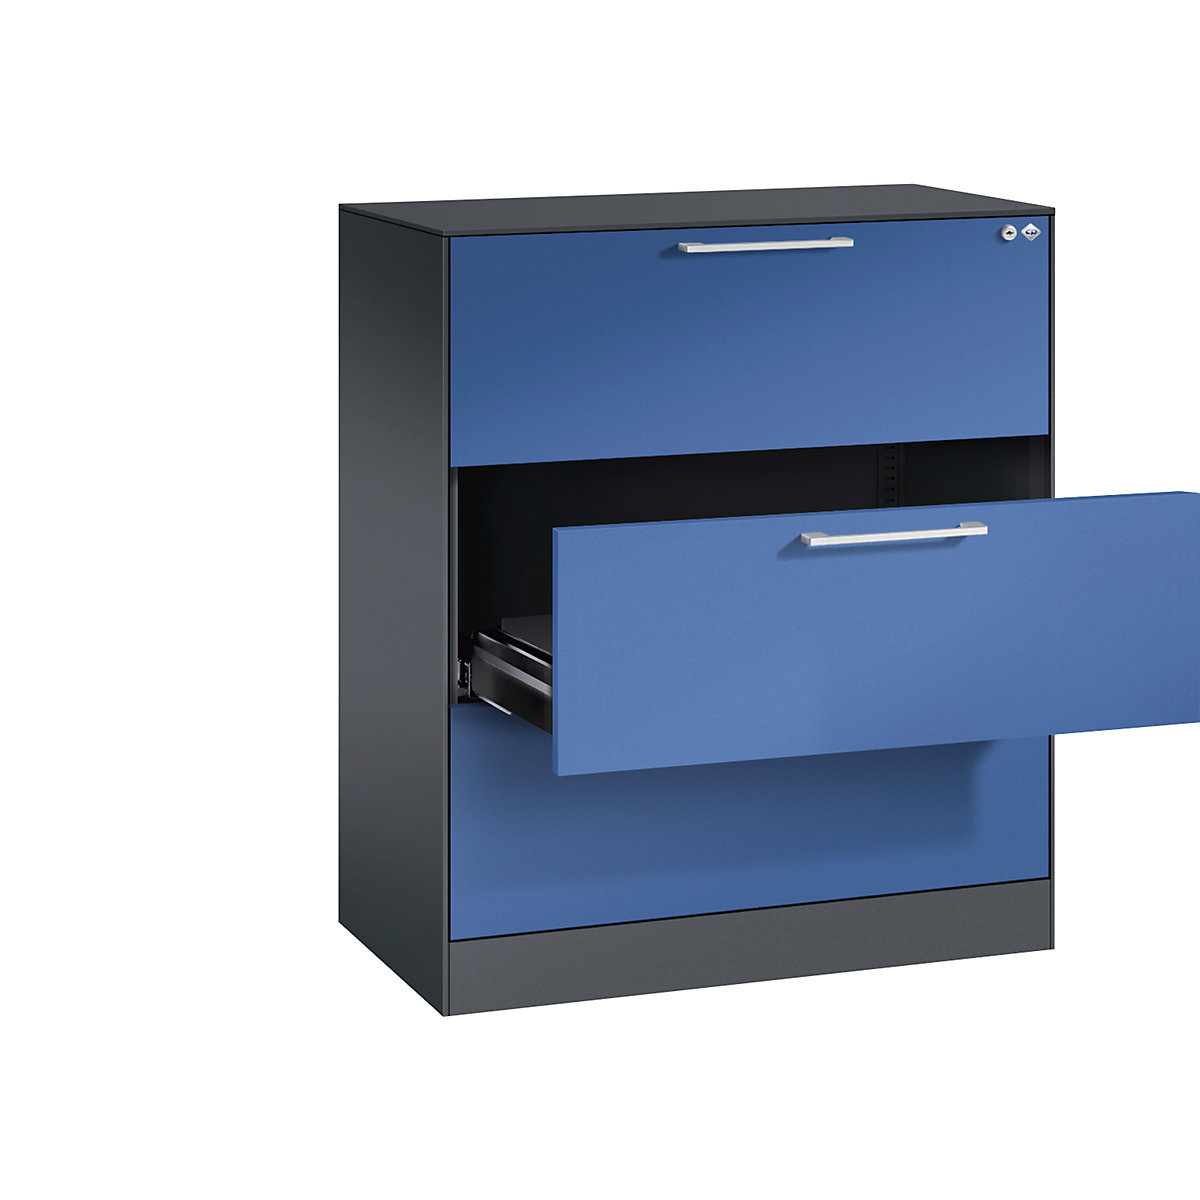 C+P – Kartotéková skříň ASISTO, výška 992 mm, se 3 výsuvy, DIN A4 na šířku, černošedá/enciánová modrá